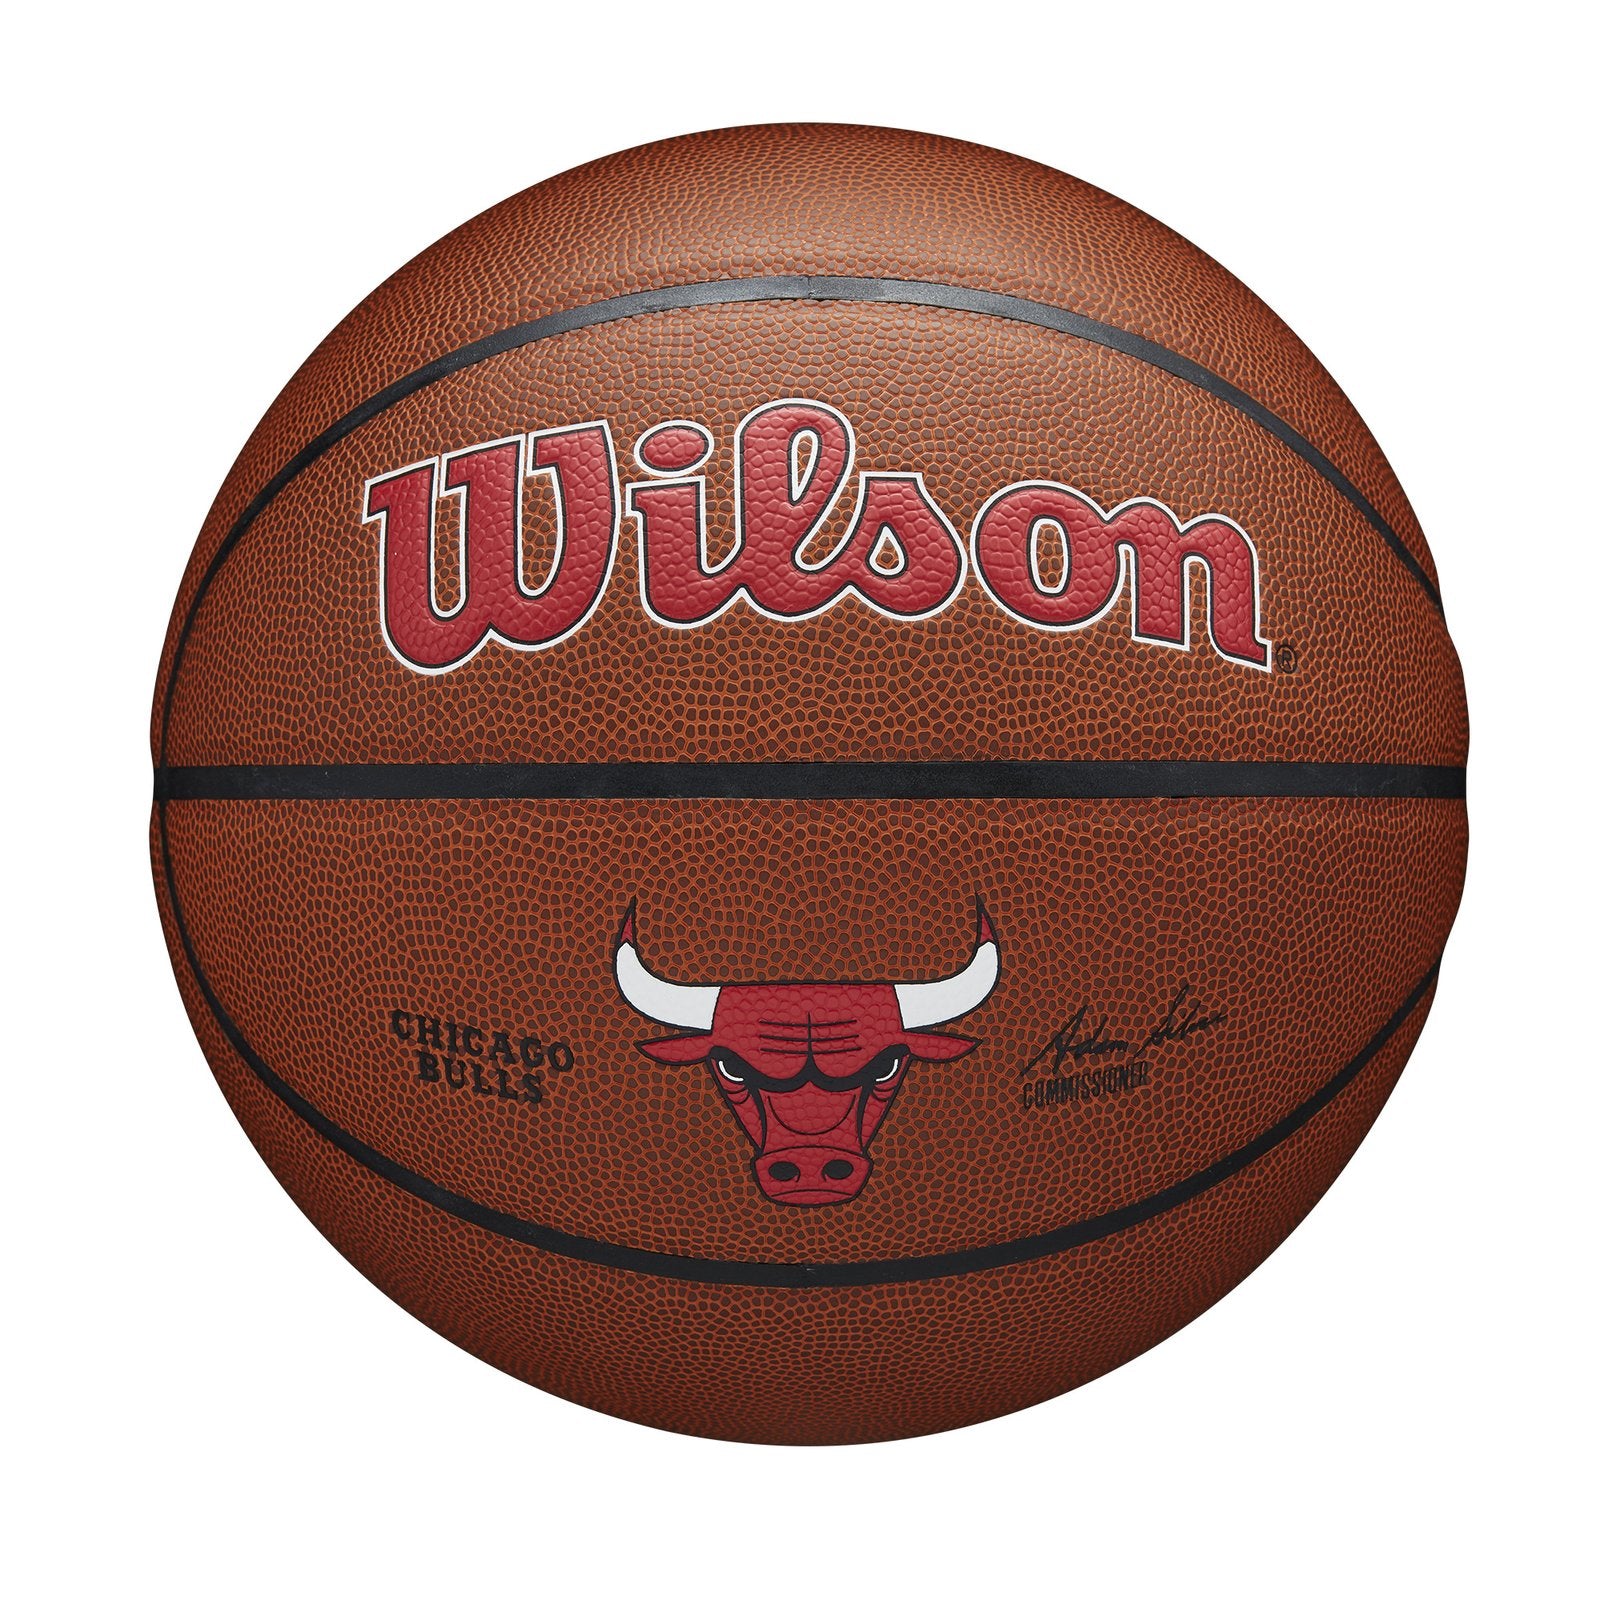 Chicago Bulls Team Mesh Youth NBA Shorts – Basketball Jersey World